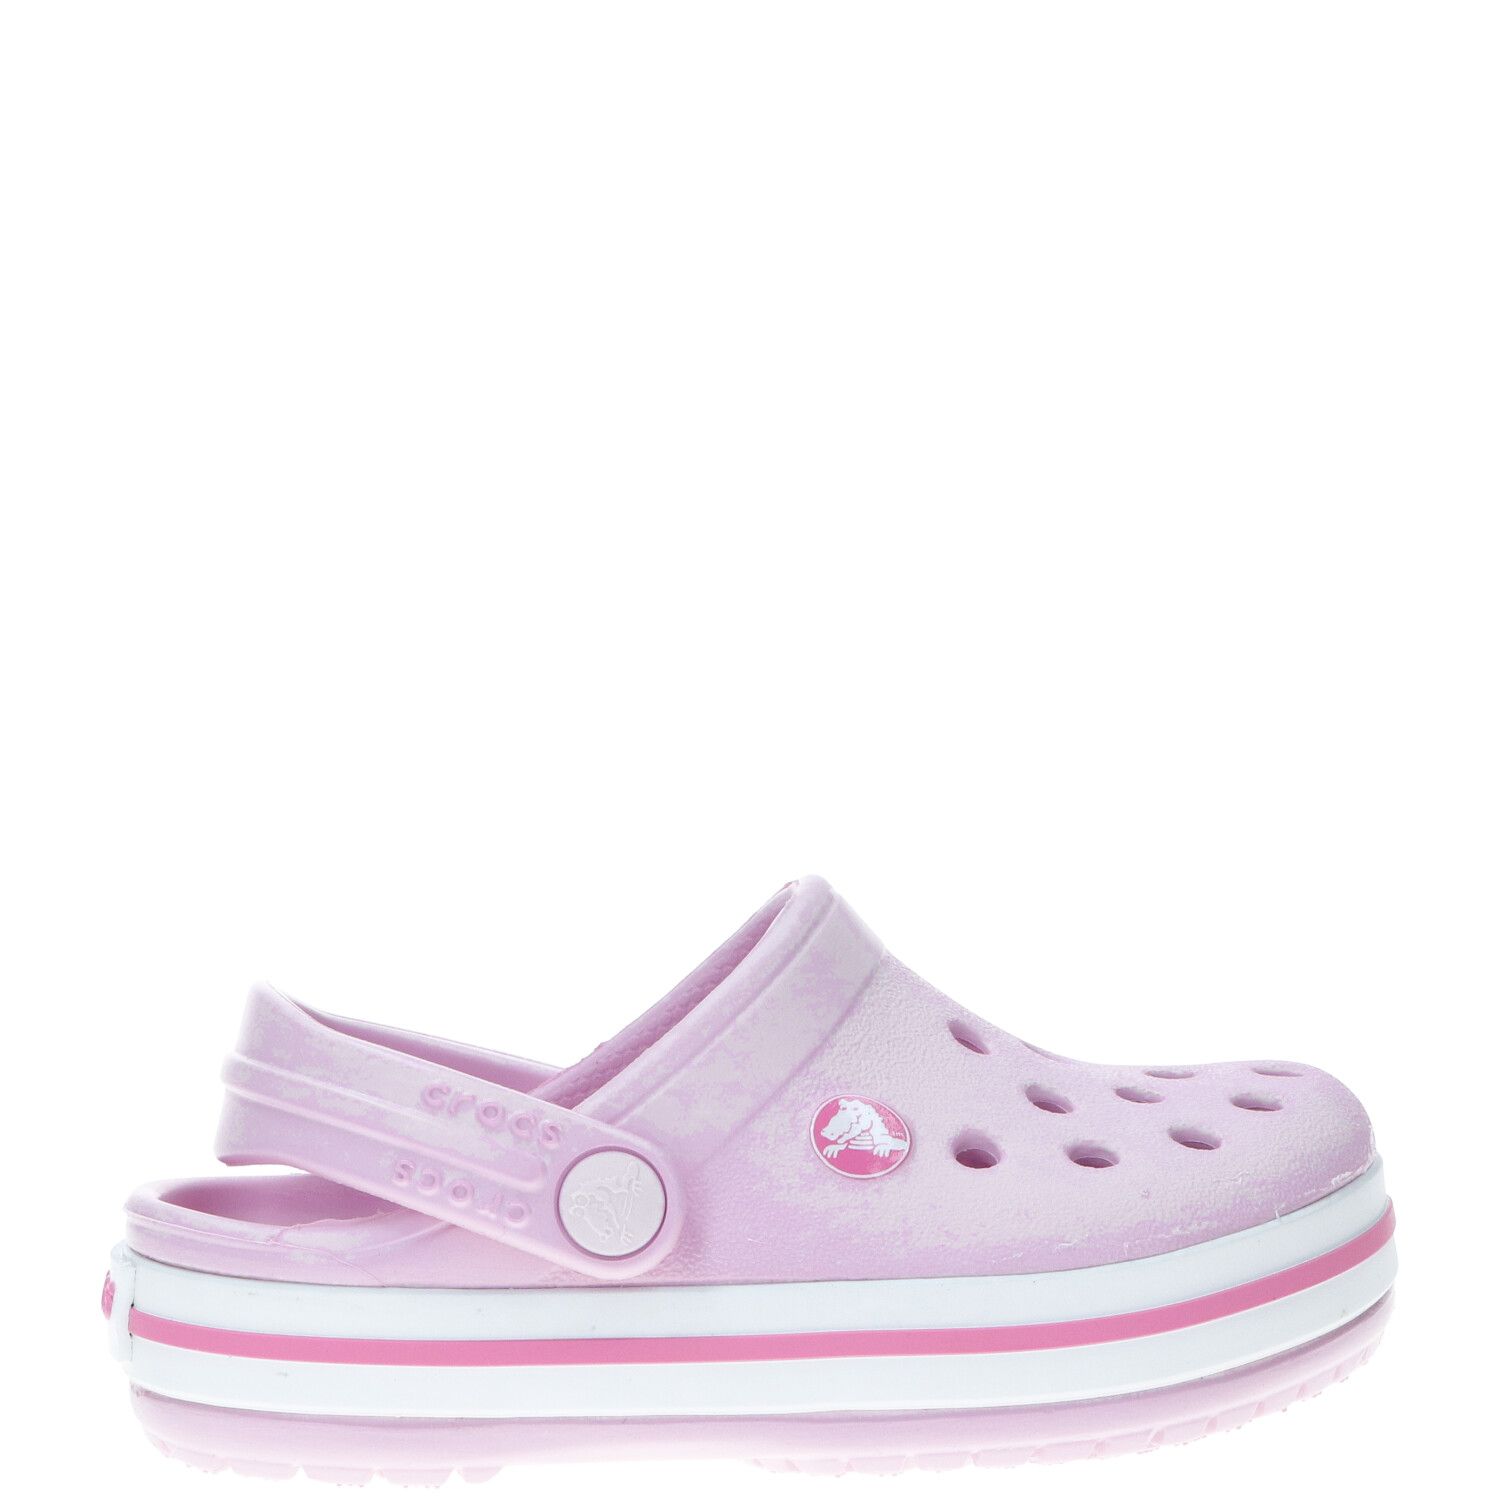 Crocs Crocband Clog, Lage schoenen, Meisje, Maat 29/30, roze